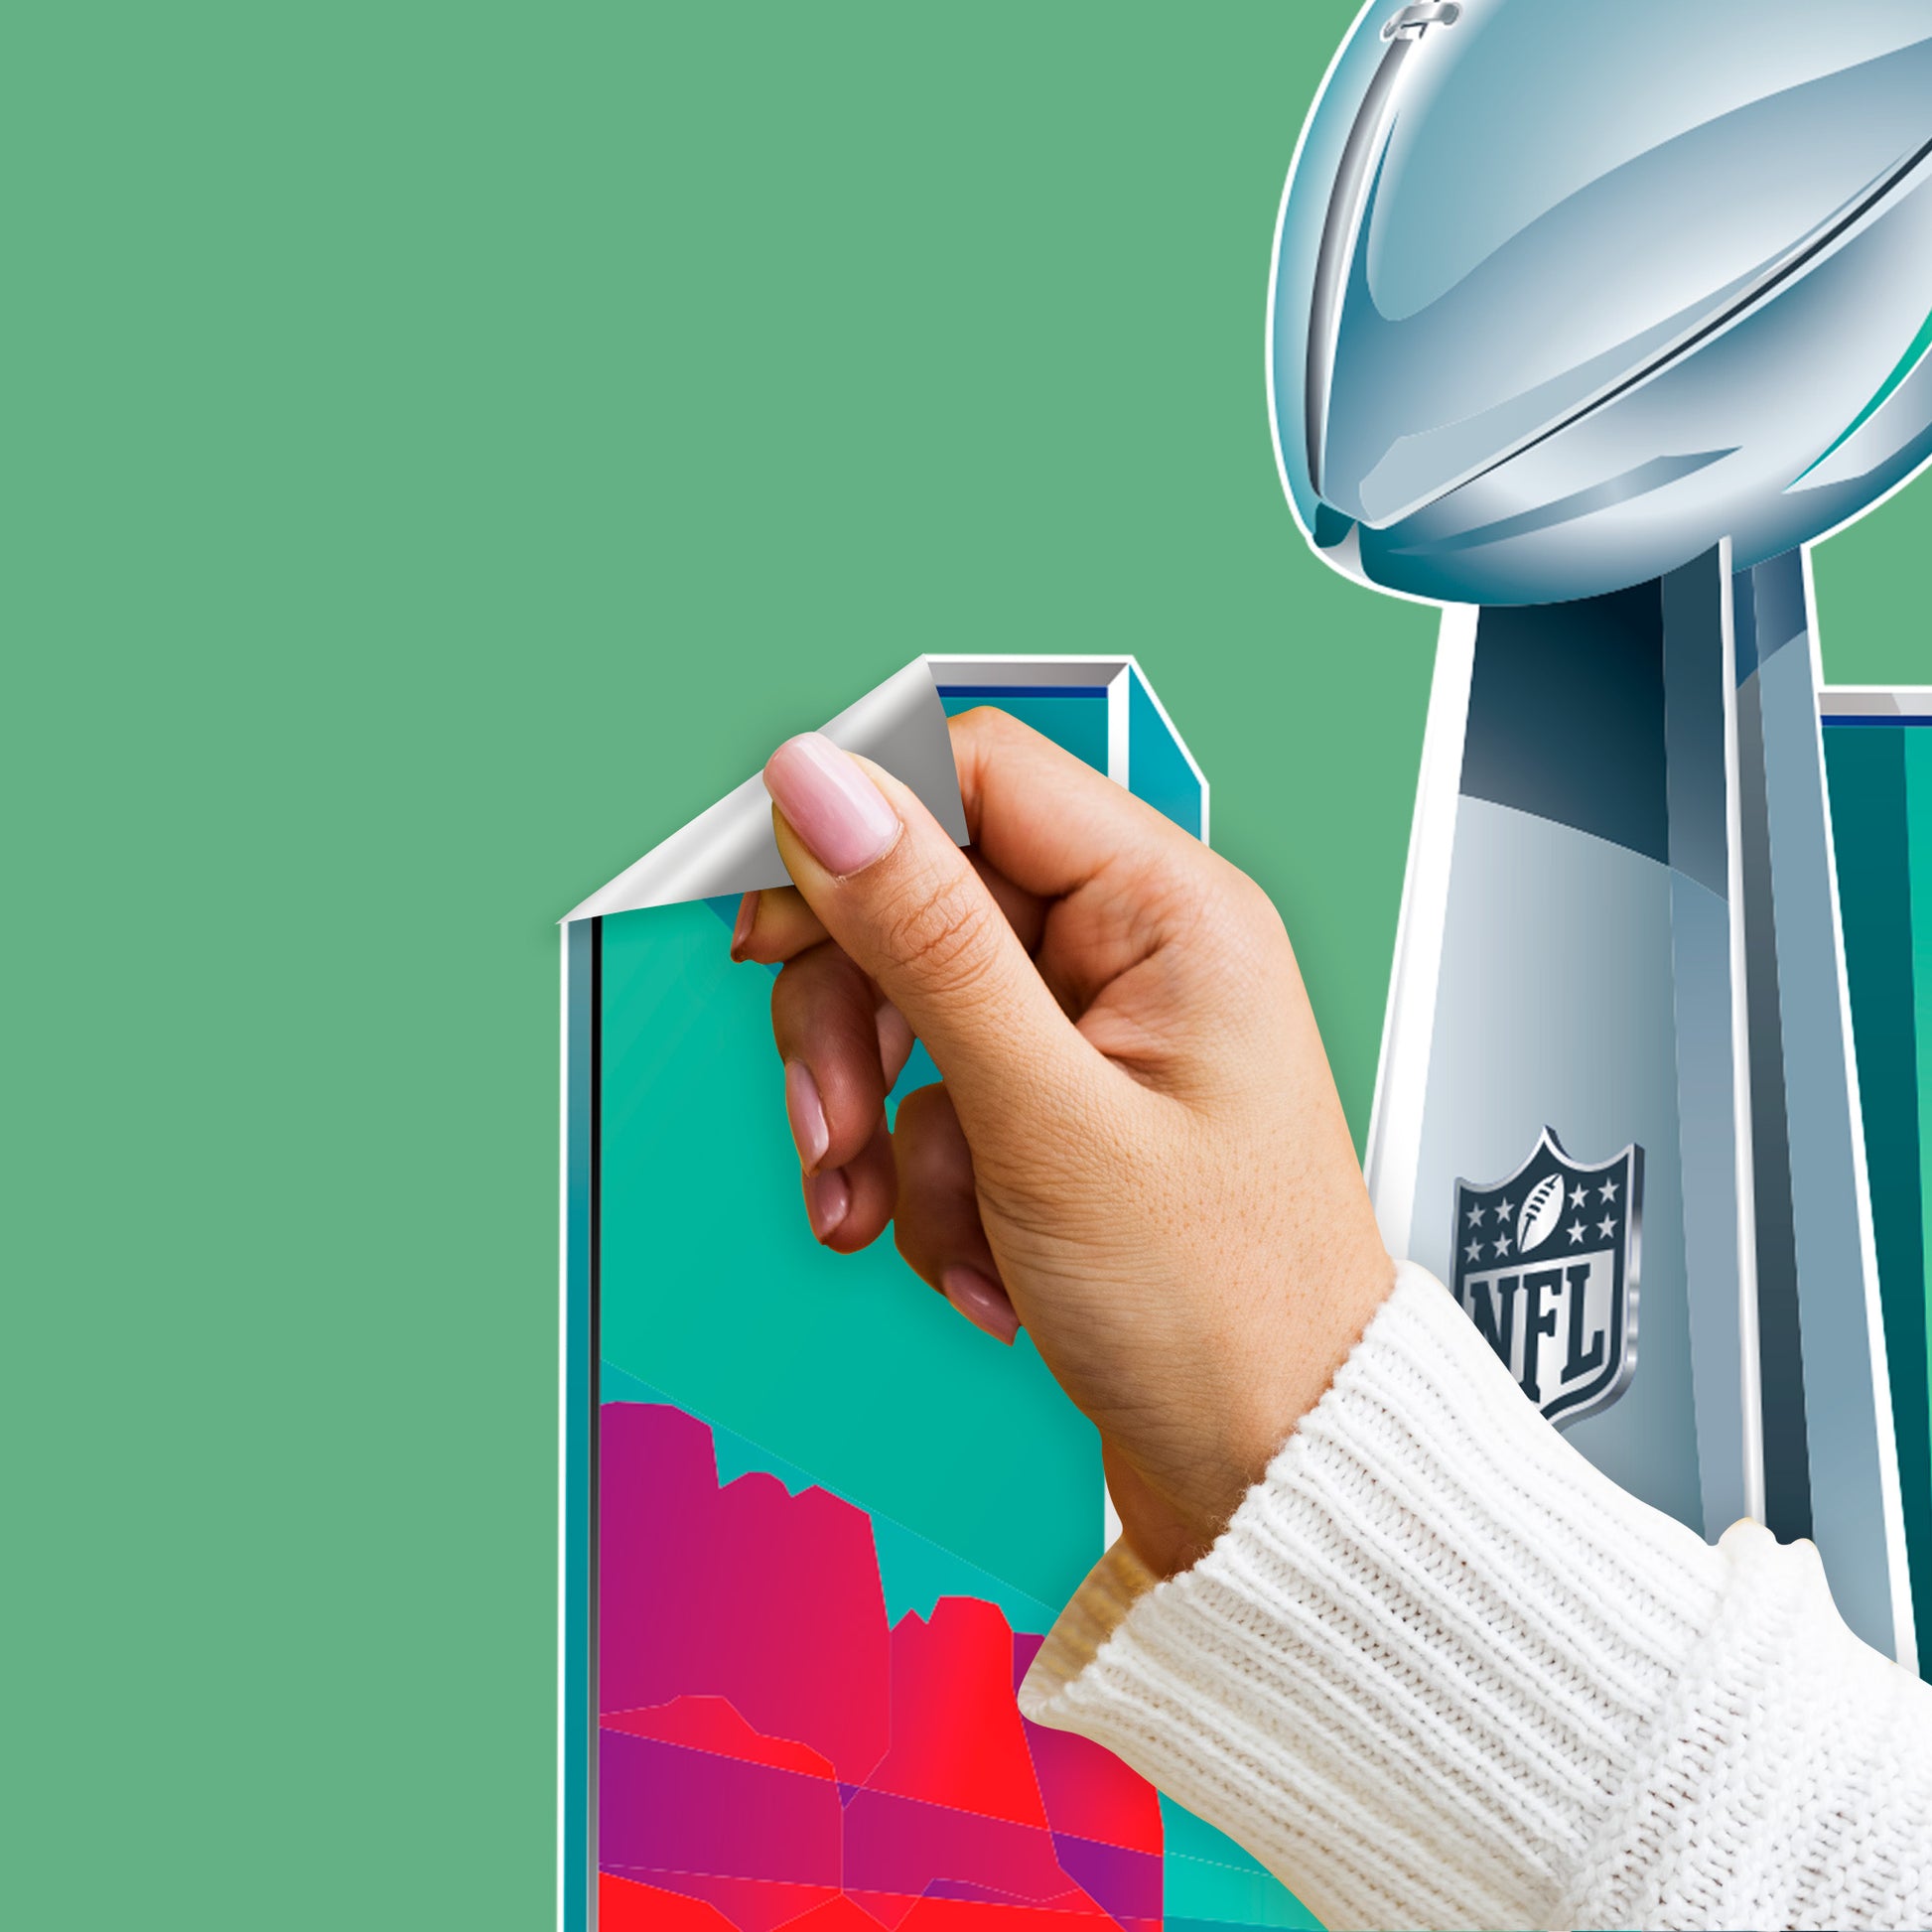 Super Bowl LVII Logo StandOut Mini Cardstock Cutout - Officially Licen –  Fathead